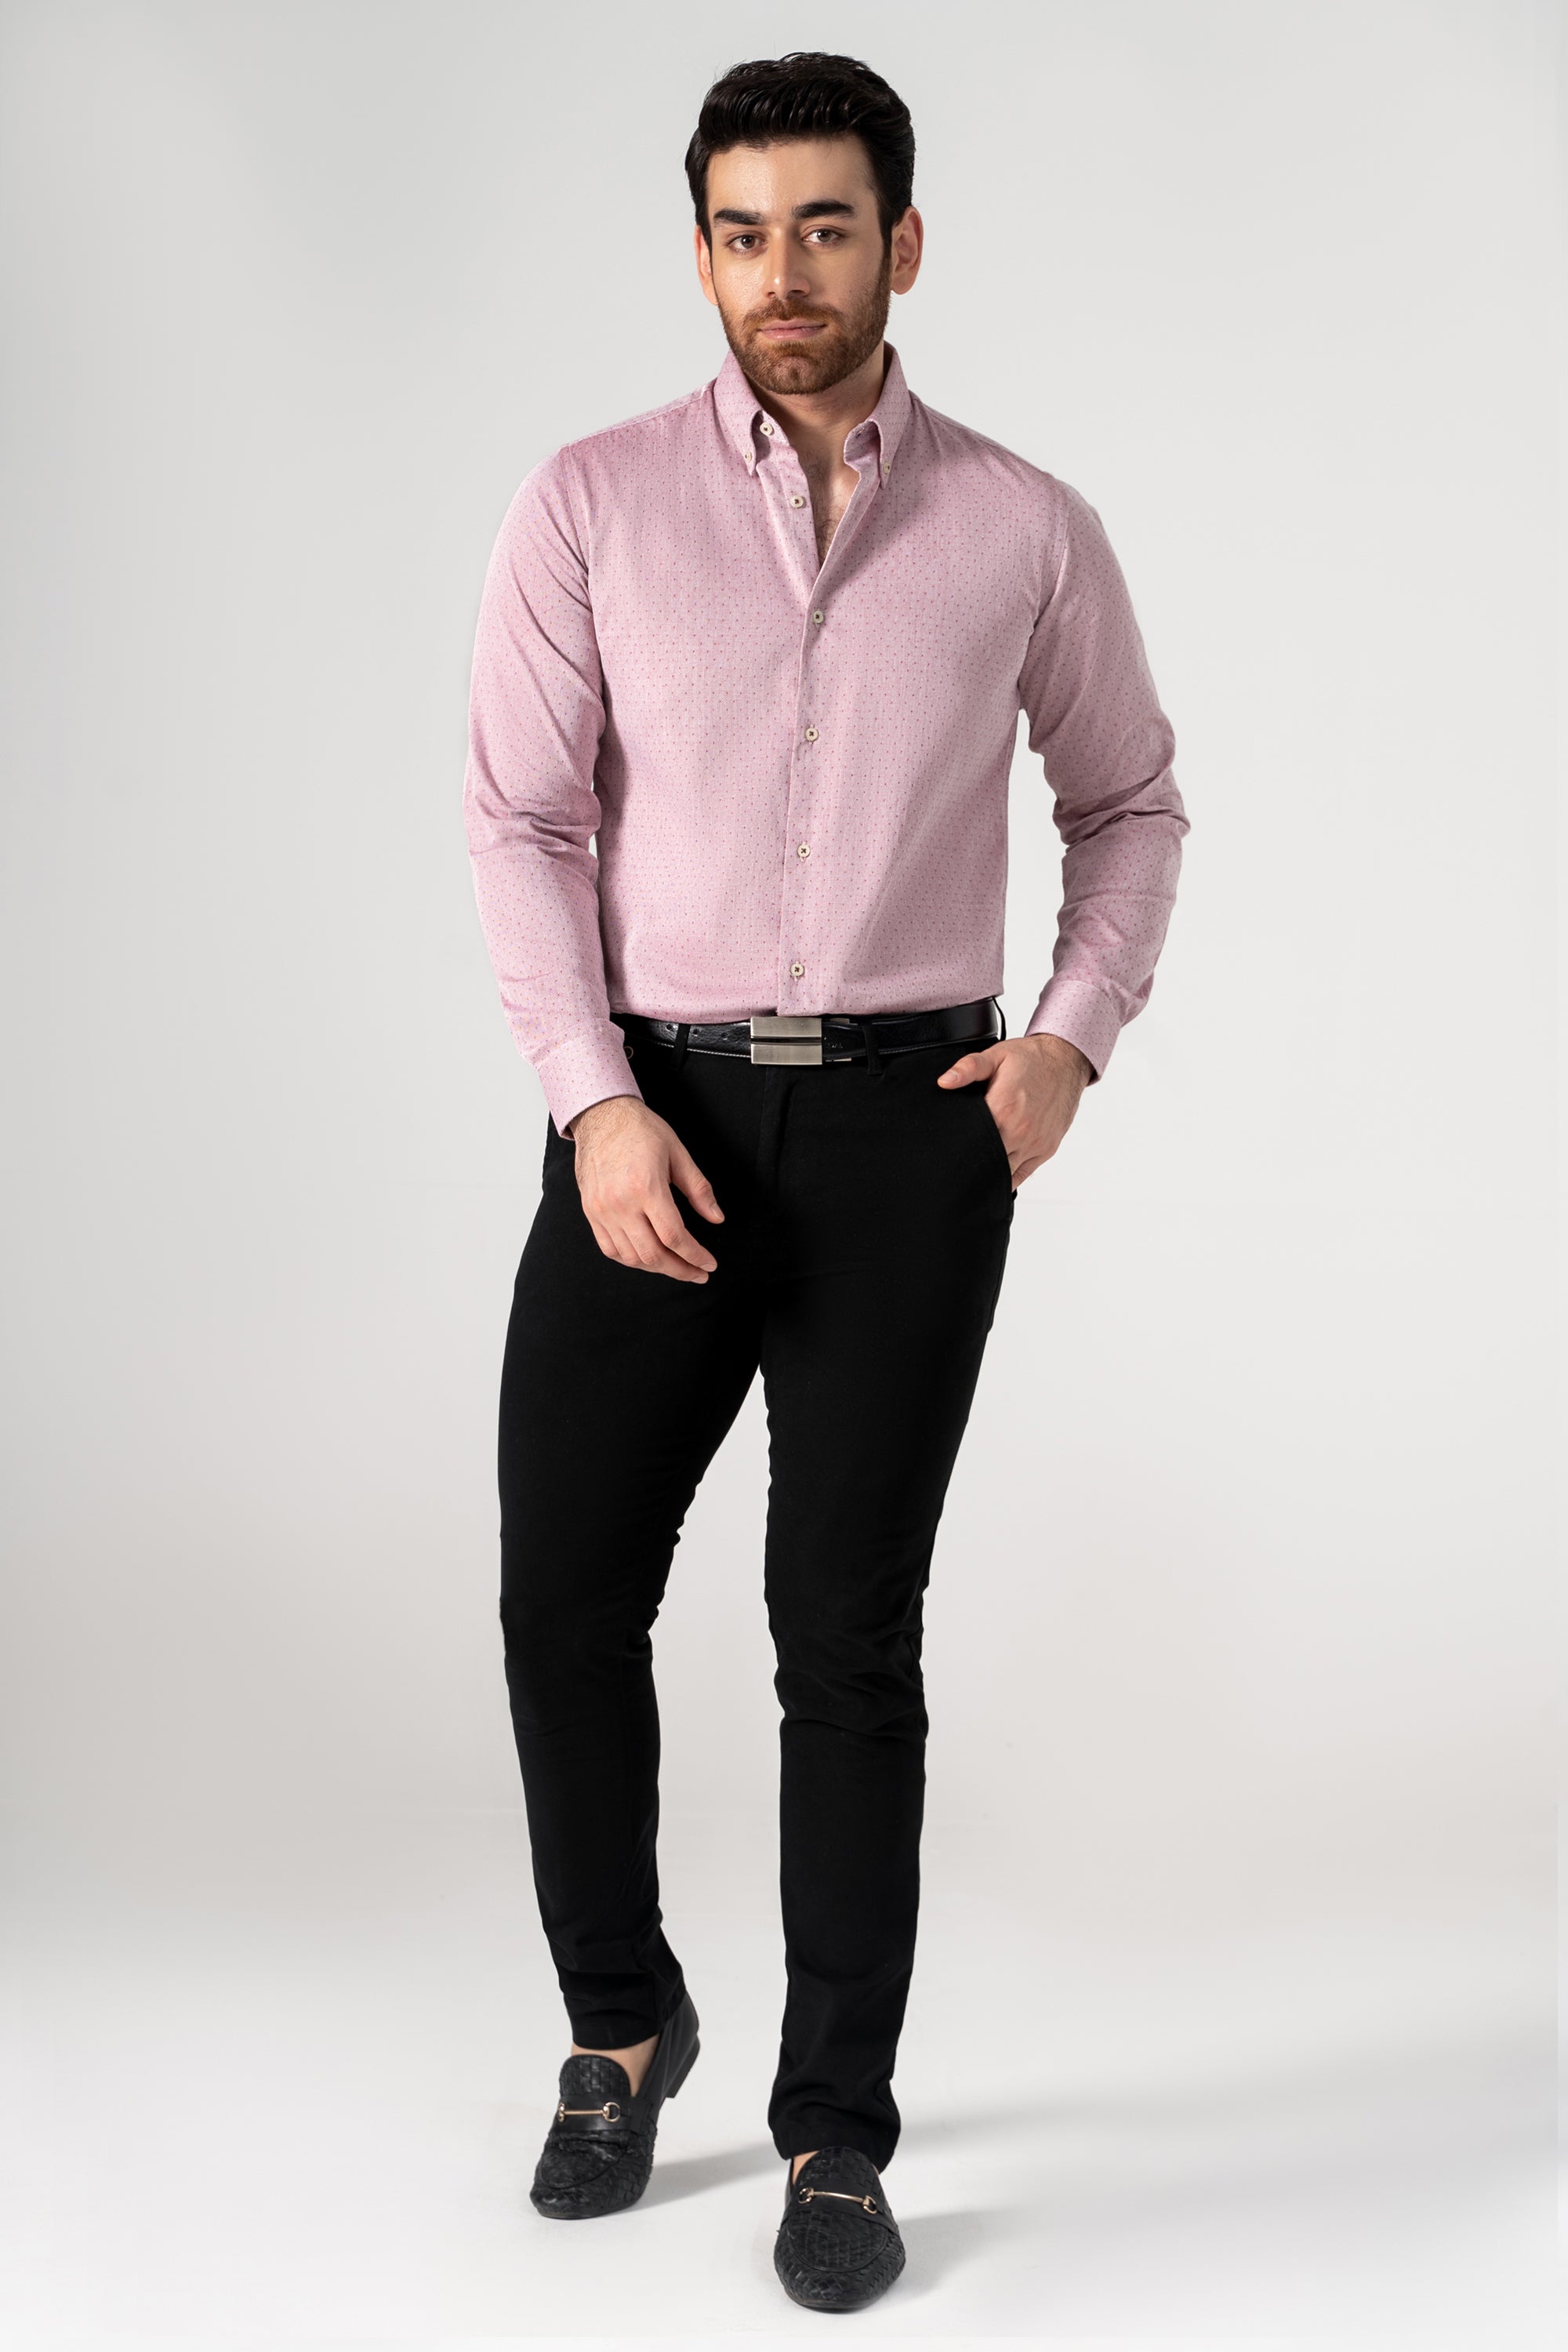 Men's Pink Blazer, Navy Dress Shirt, White Dress Pants, Dark Brown Suede  Loafers | Lookastic